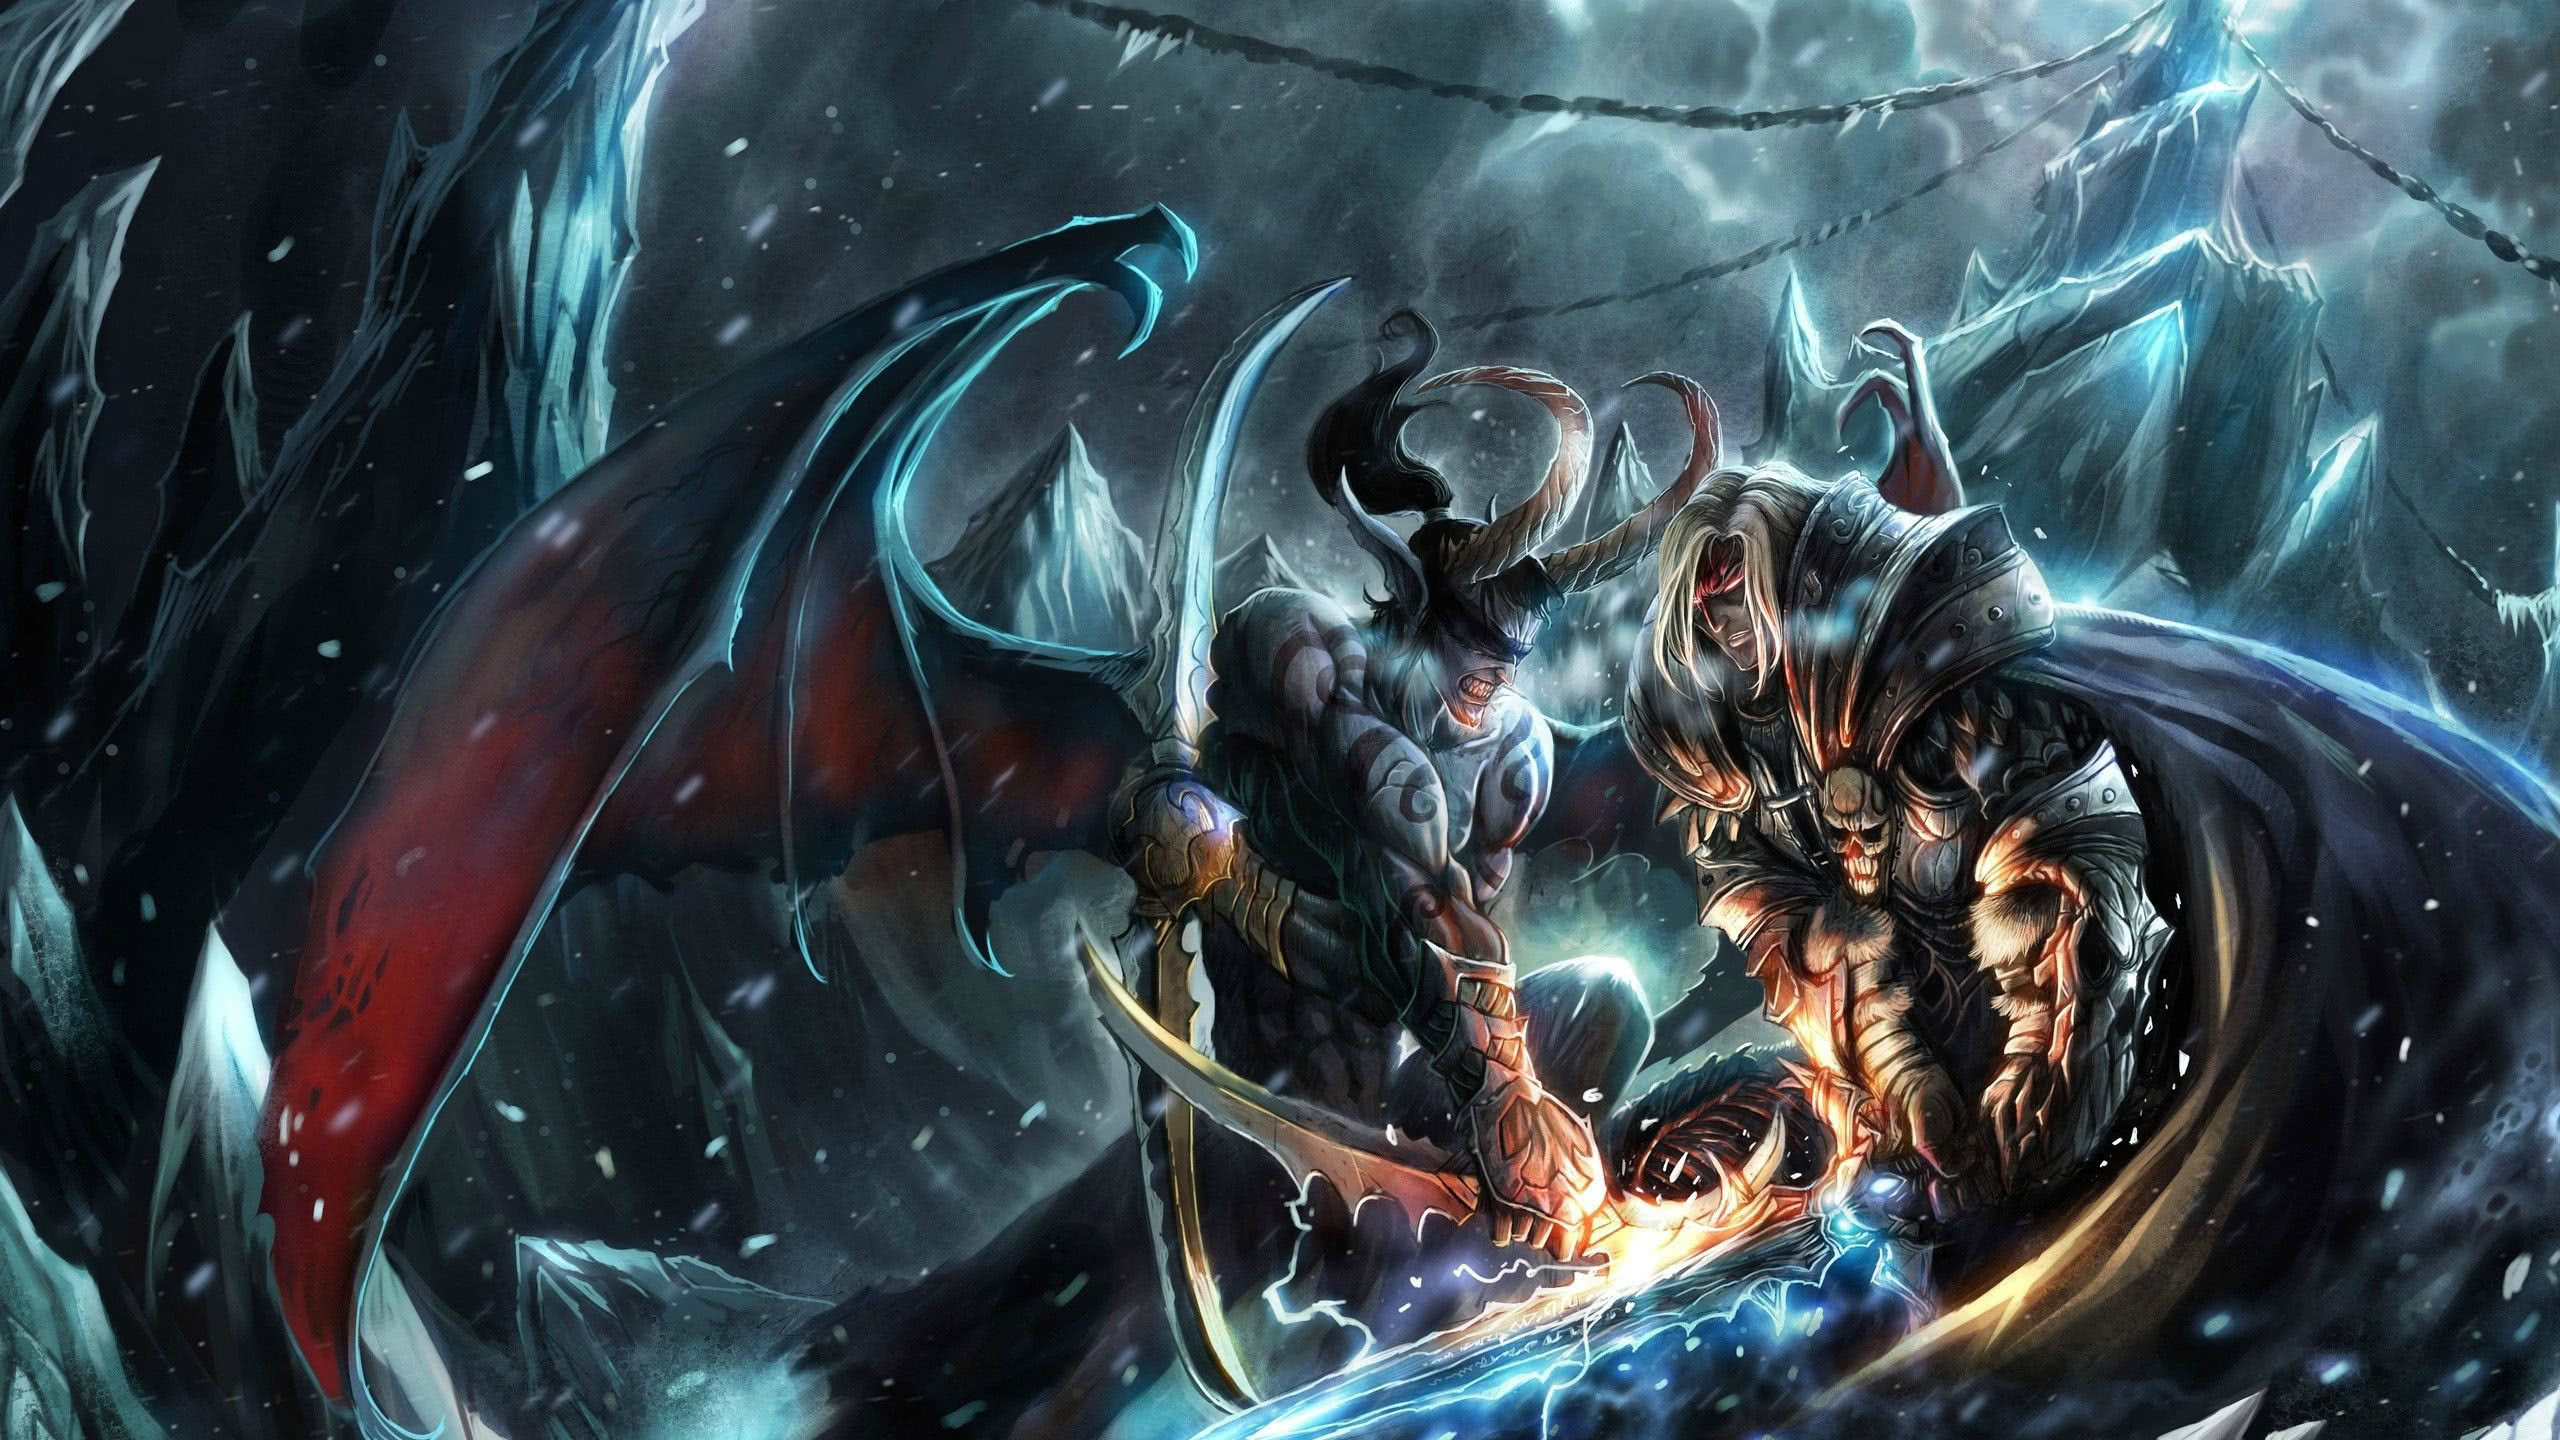 Warcraft showdown, Arthas vs Illidan, Northrend battle, WQHD wallpaper, 2560x1440 HD Desktop